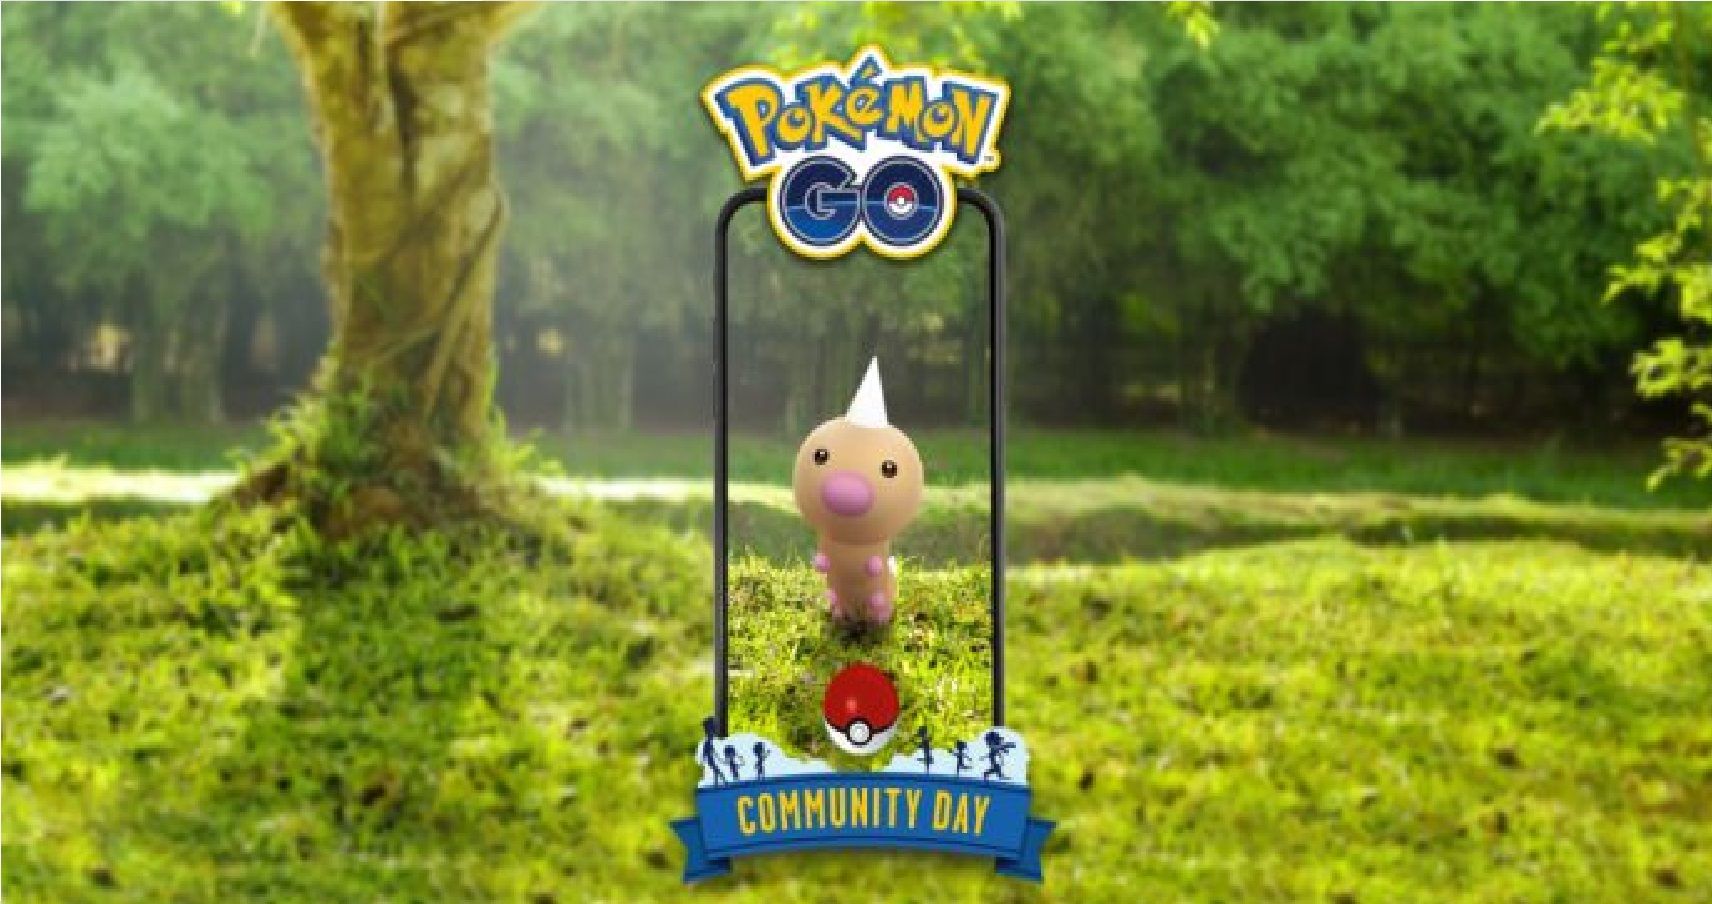 Pokémon Gos June Community Day Brings Shiny Beedrill & Weedle